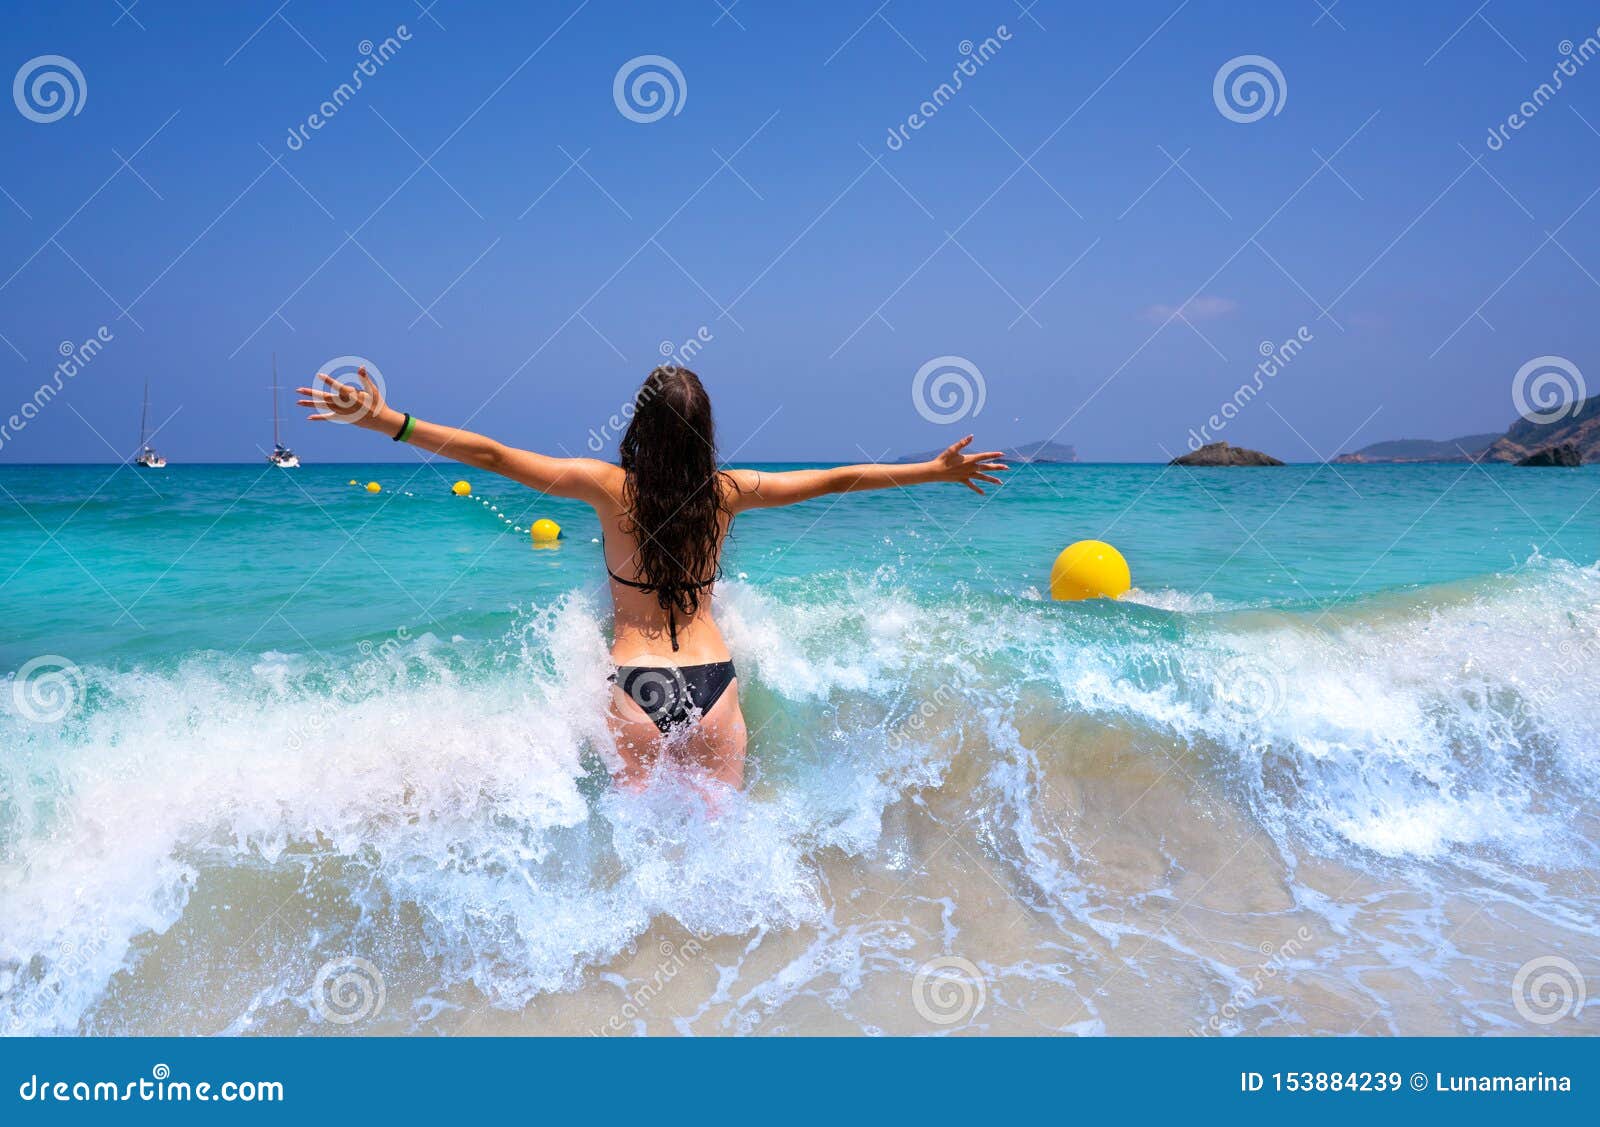 ibiza beach girl splashing water in balearics